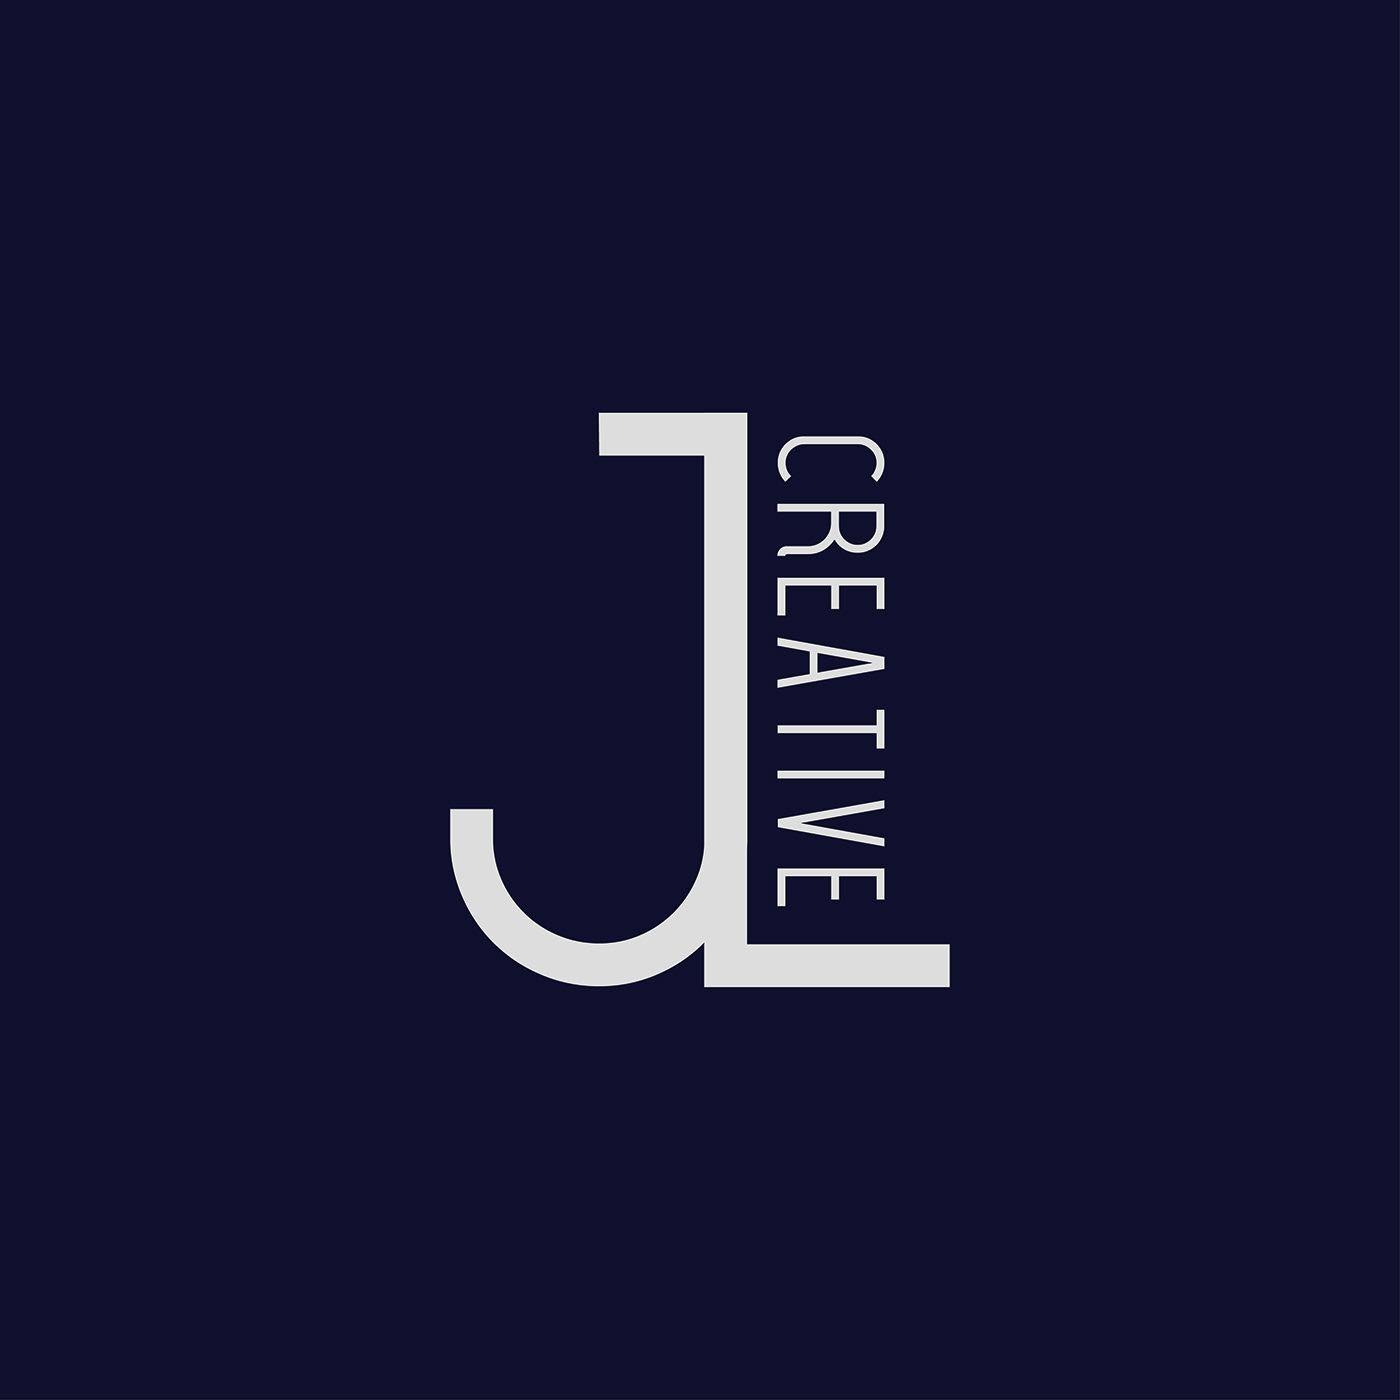 Merchandising Logo - J L Creative - Events/Merchandising Logo on Behance